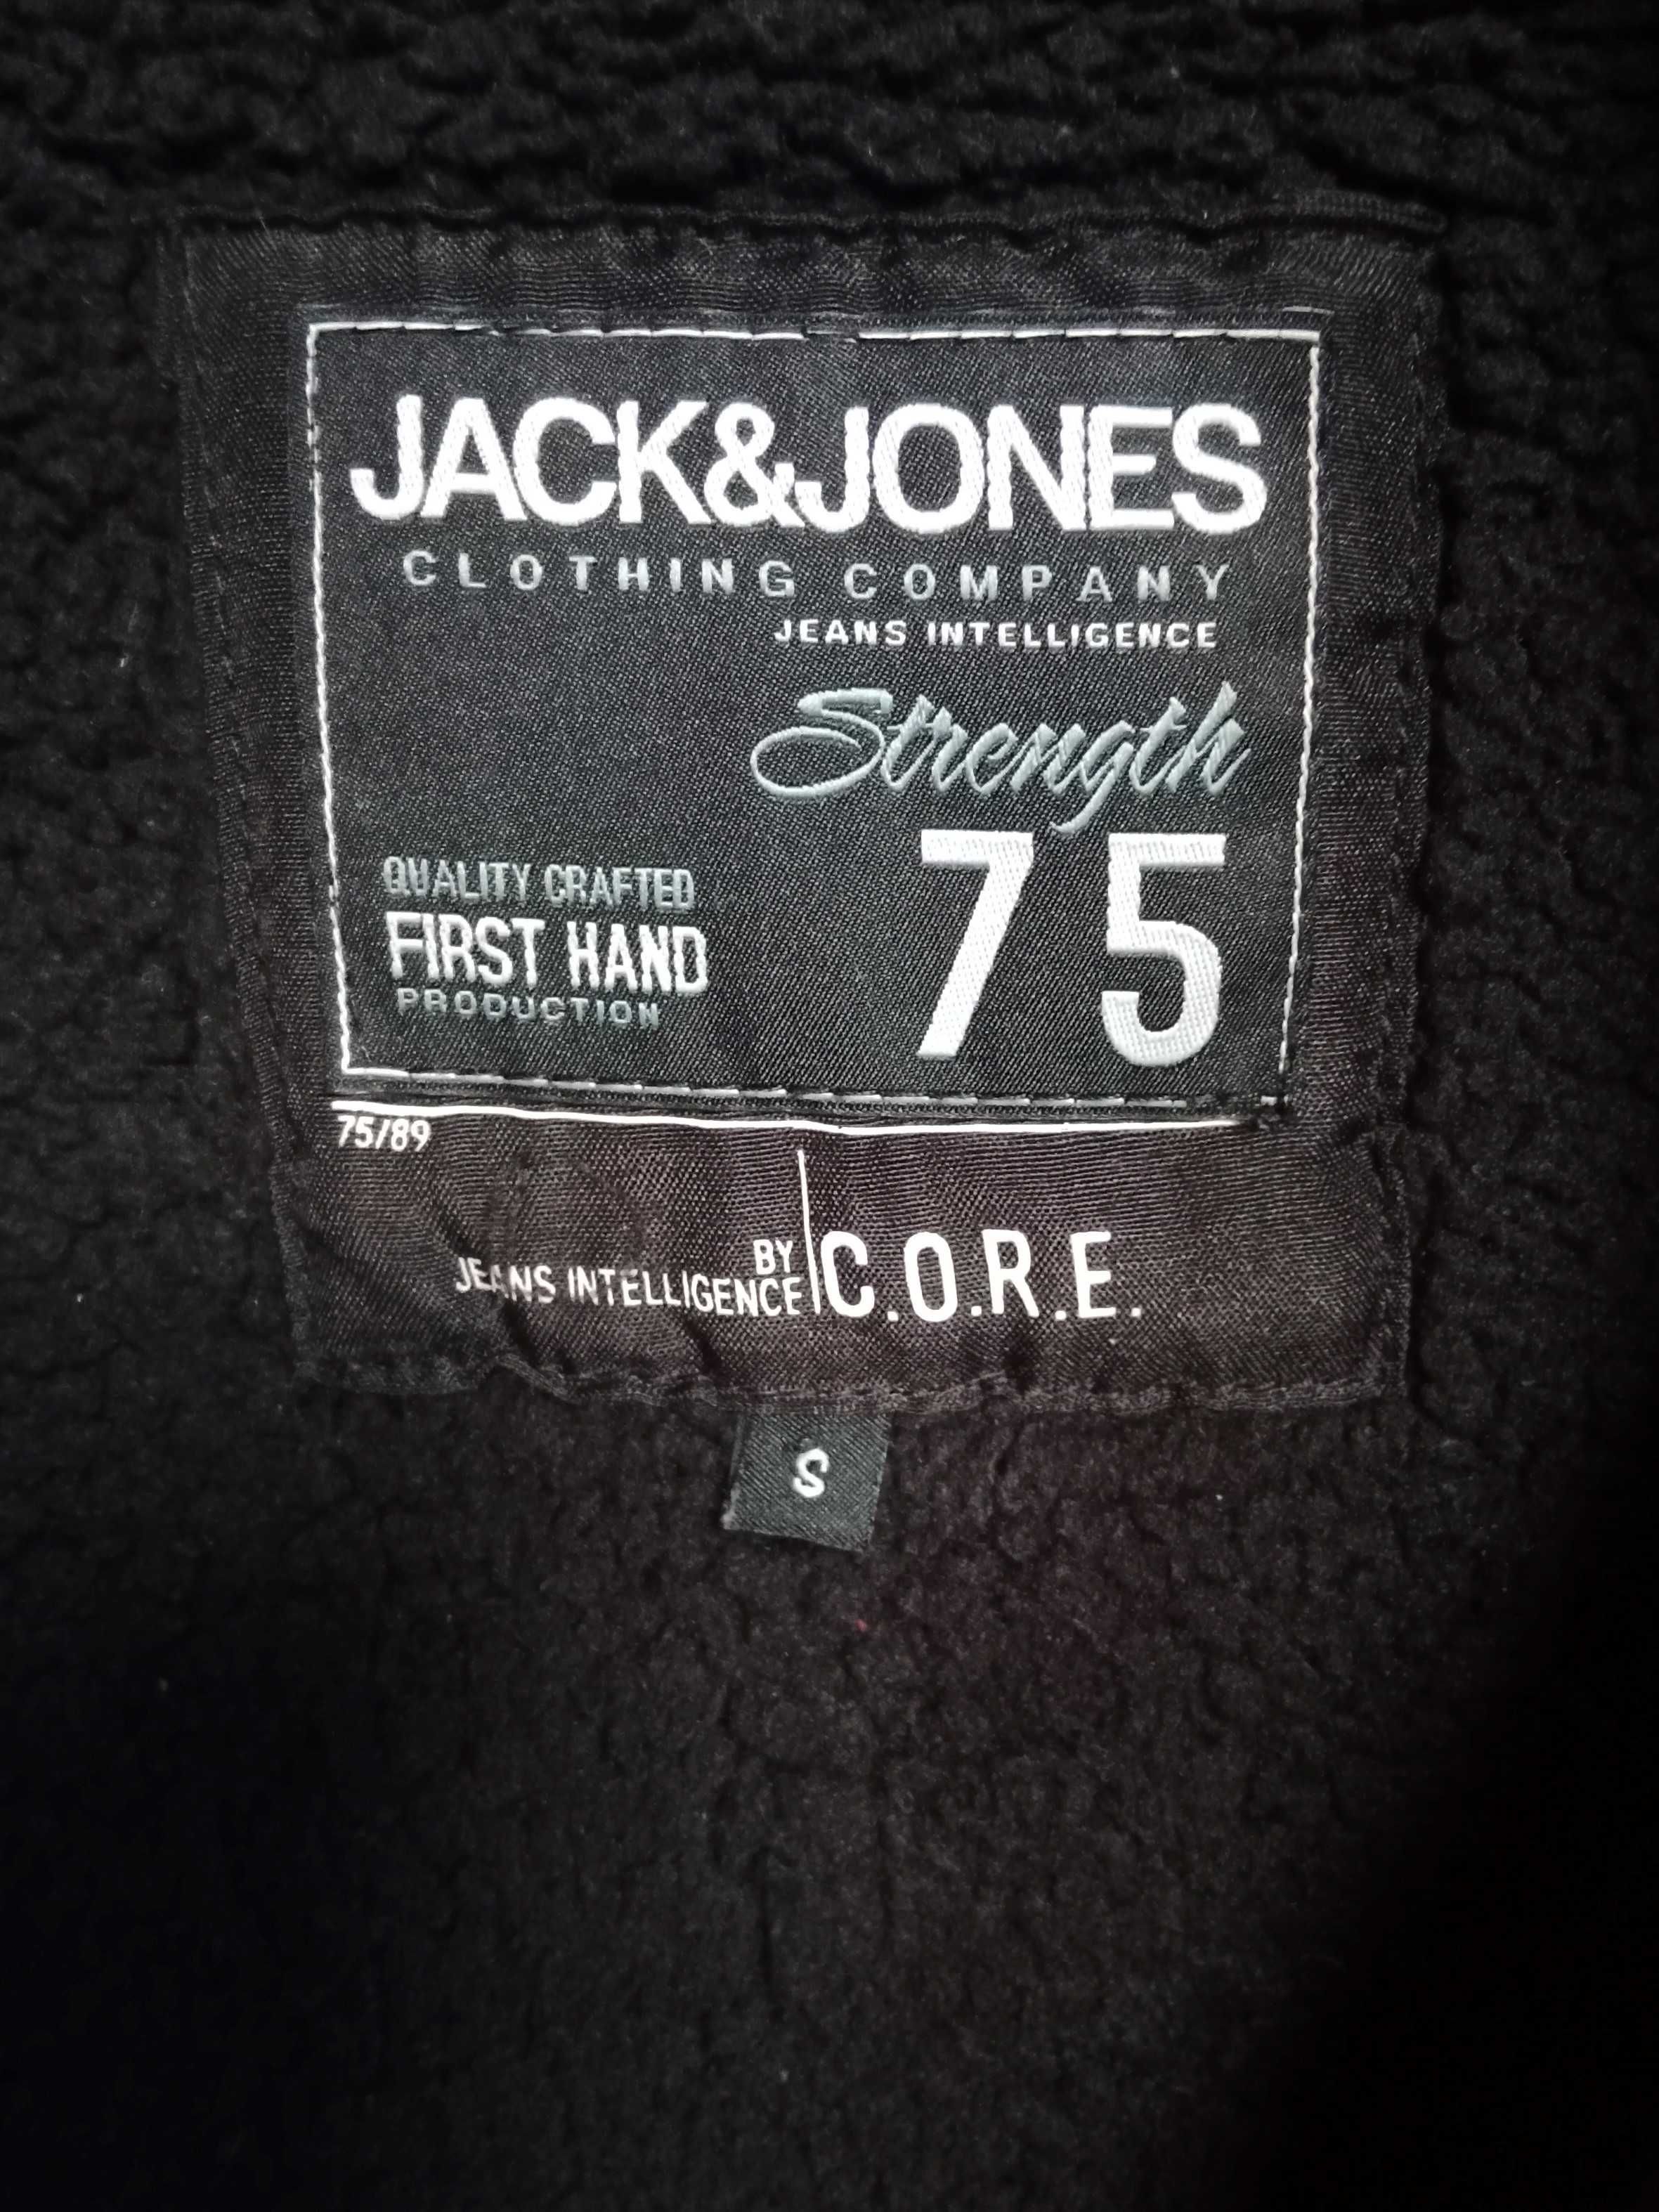 Bluza zapinana Jack & Jones, rozmiar S.